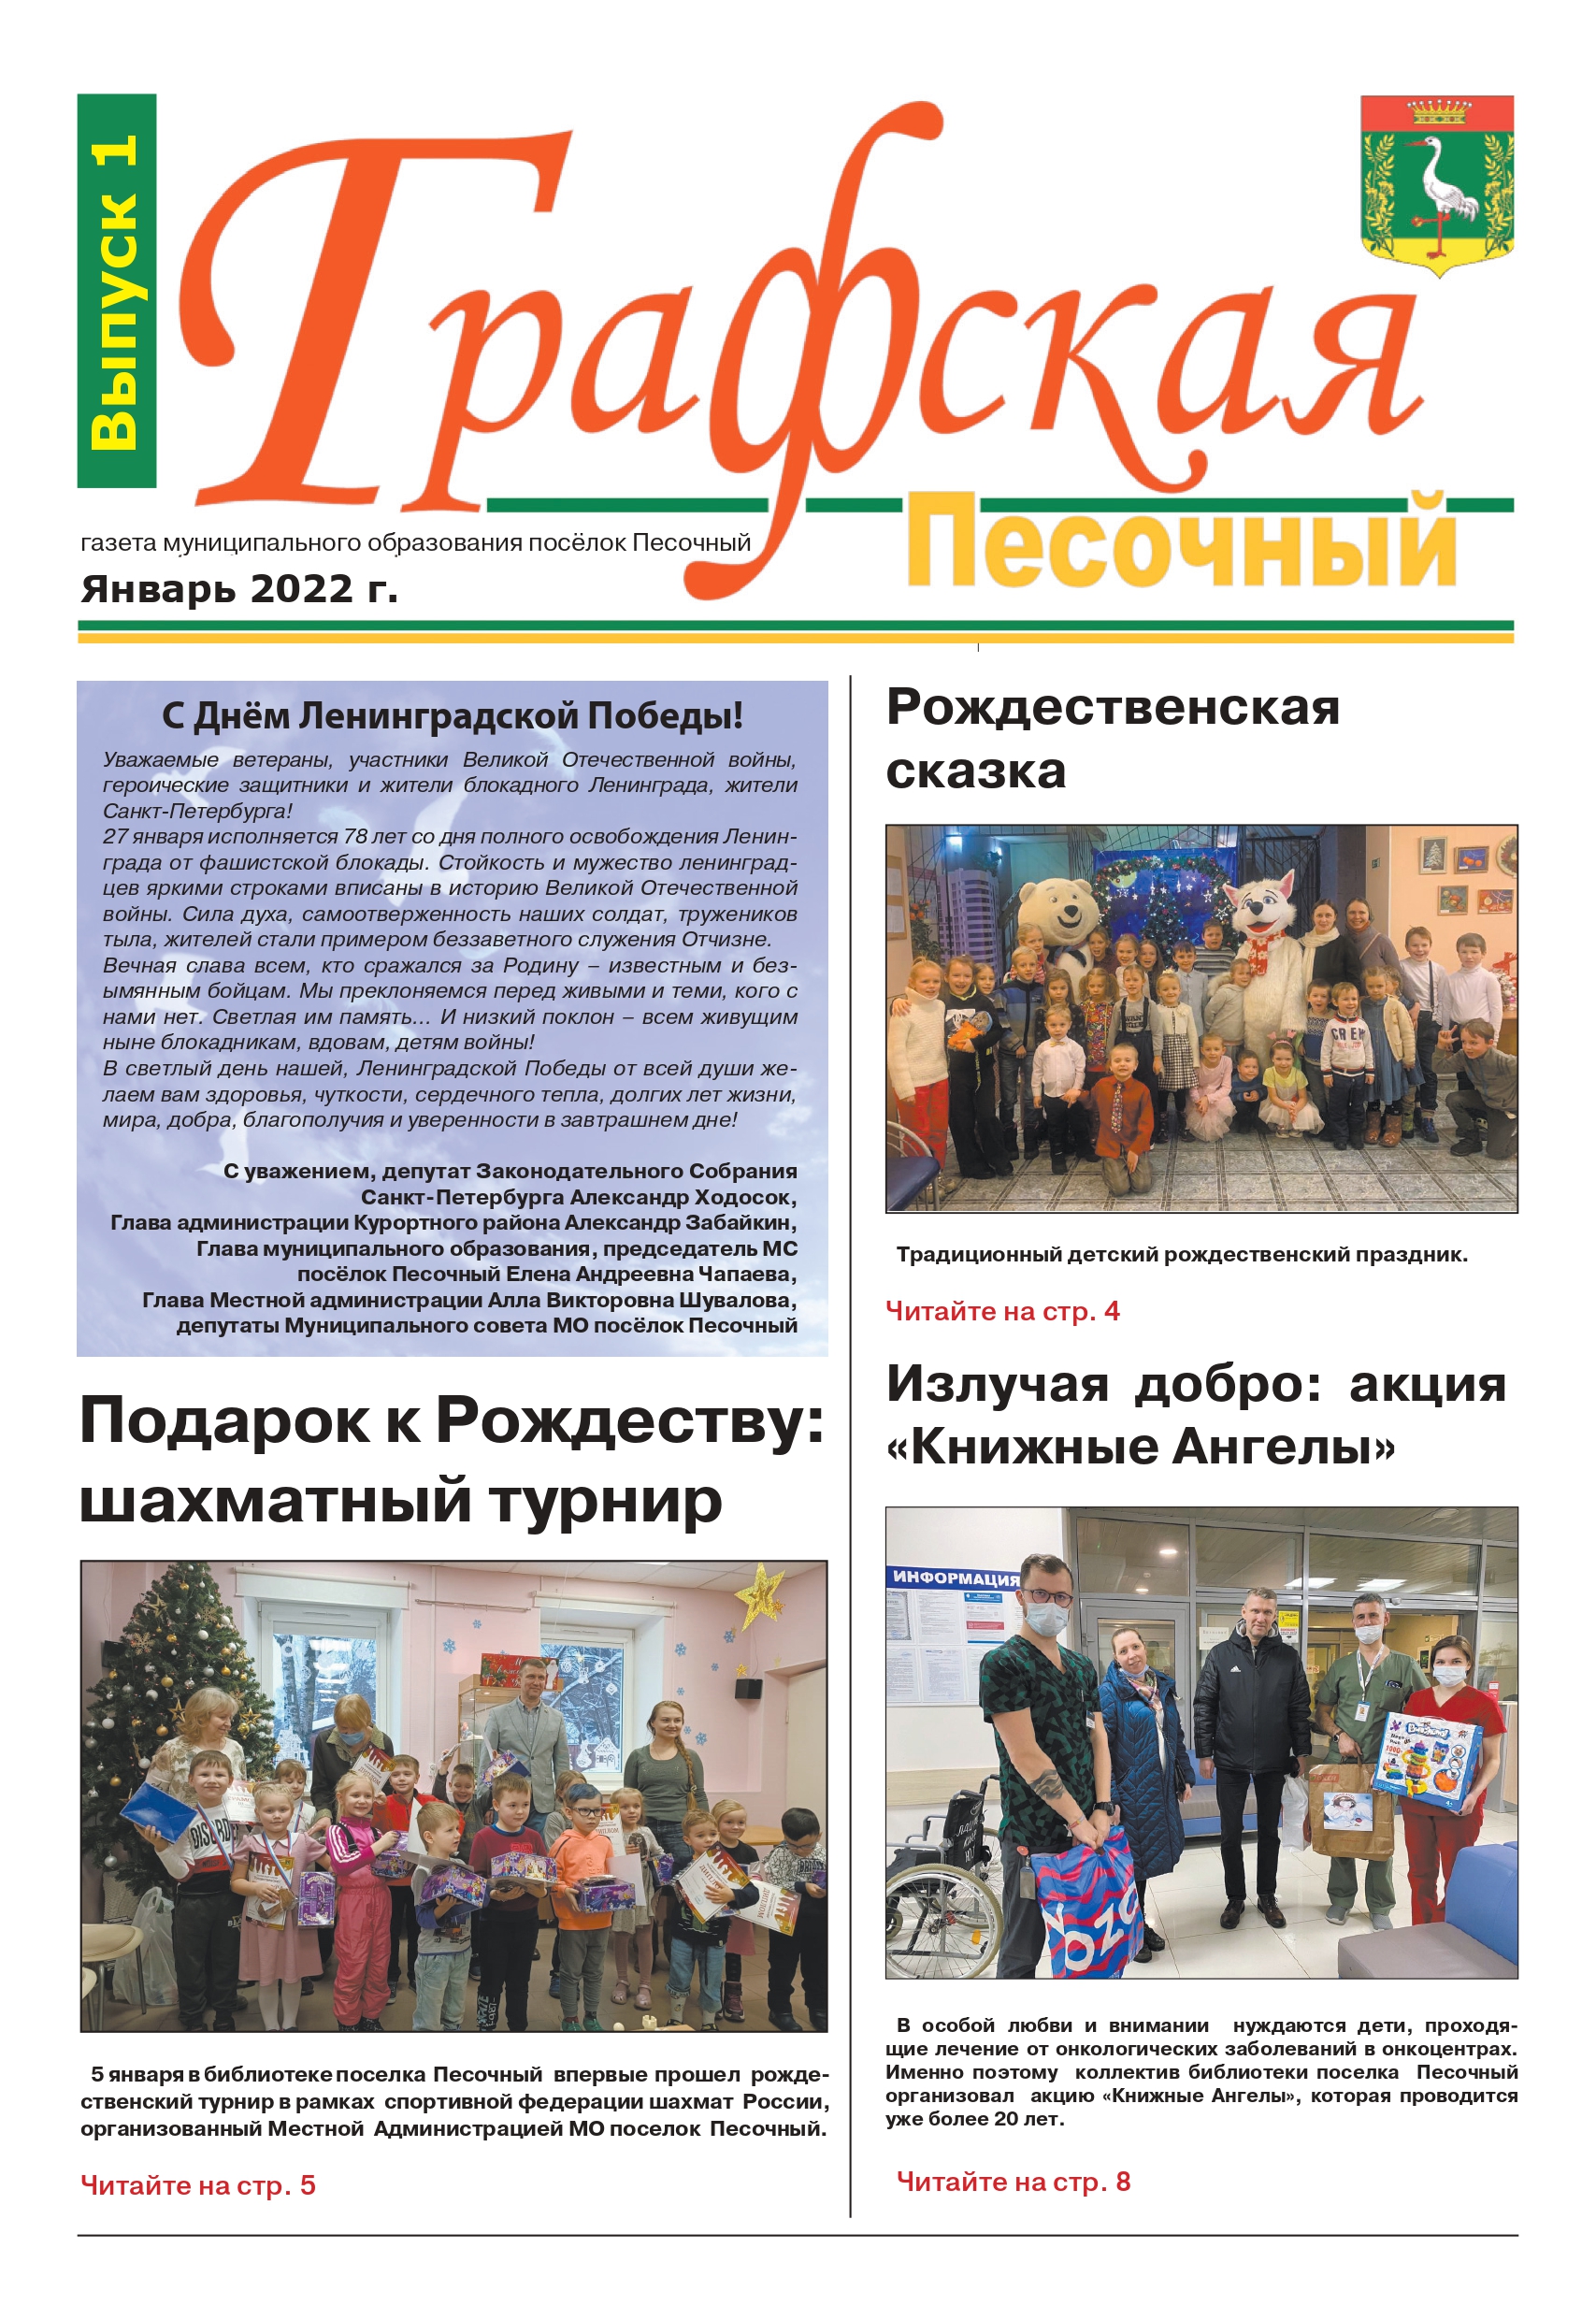 Газета "Графская" выпуск № 1, январь 2022